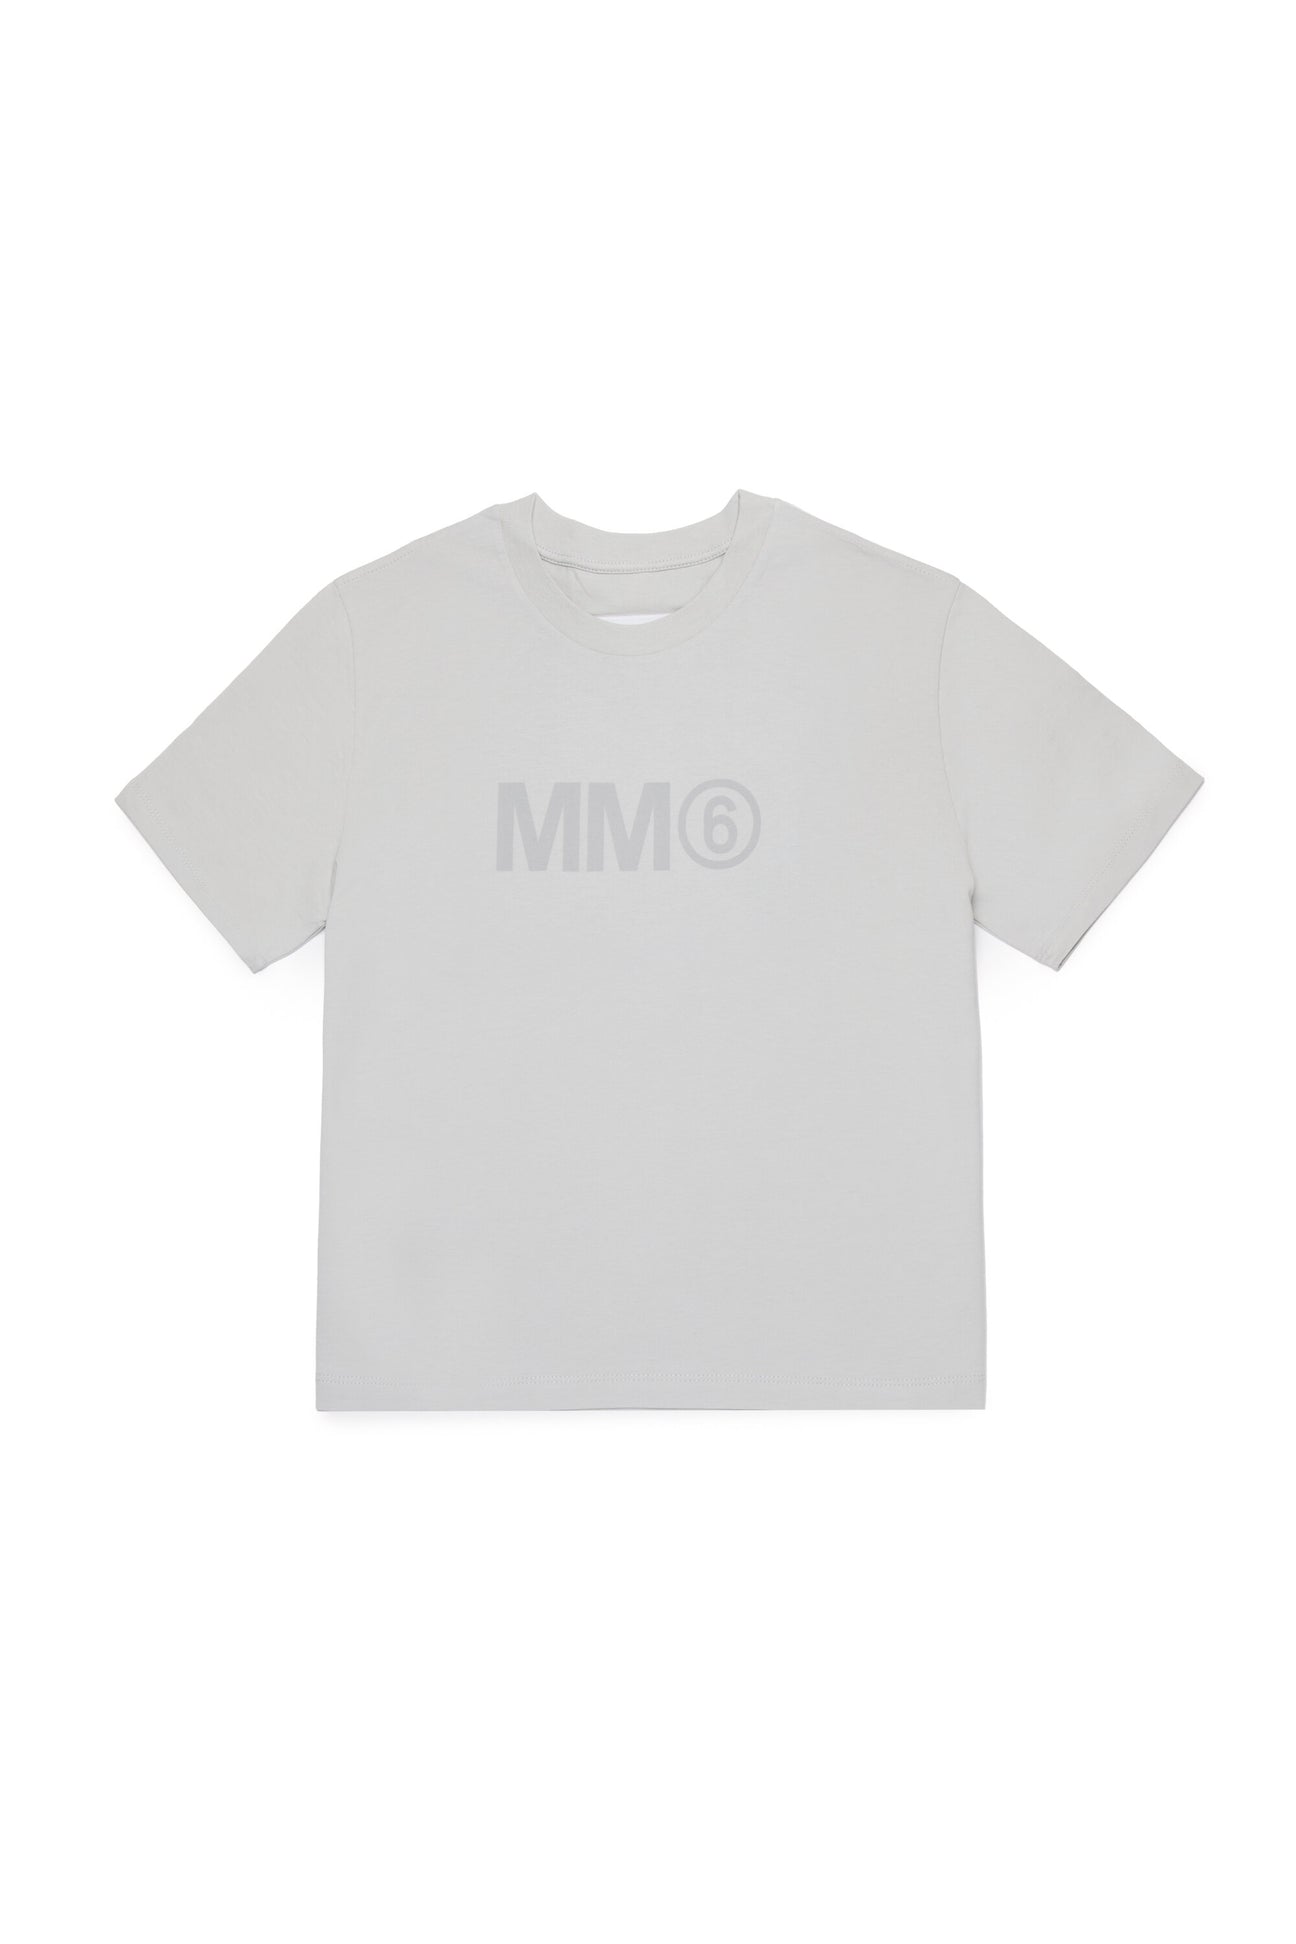 MM6ブランドTシャツ - 3枚セット MM6ブランドTシャツ - 3枚セット